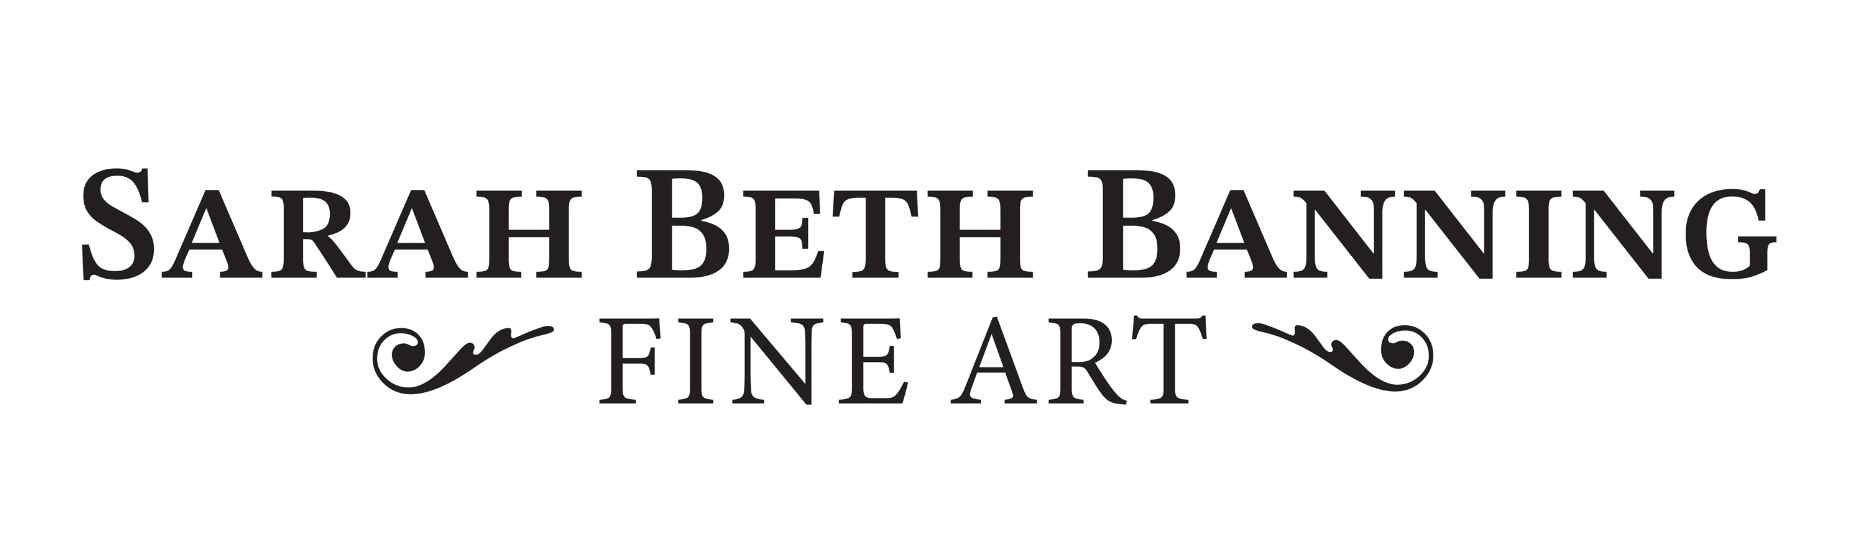 Sarah Beth Banning Fine Art